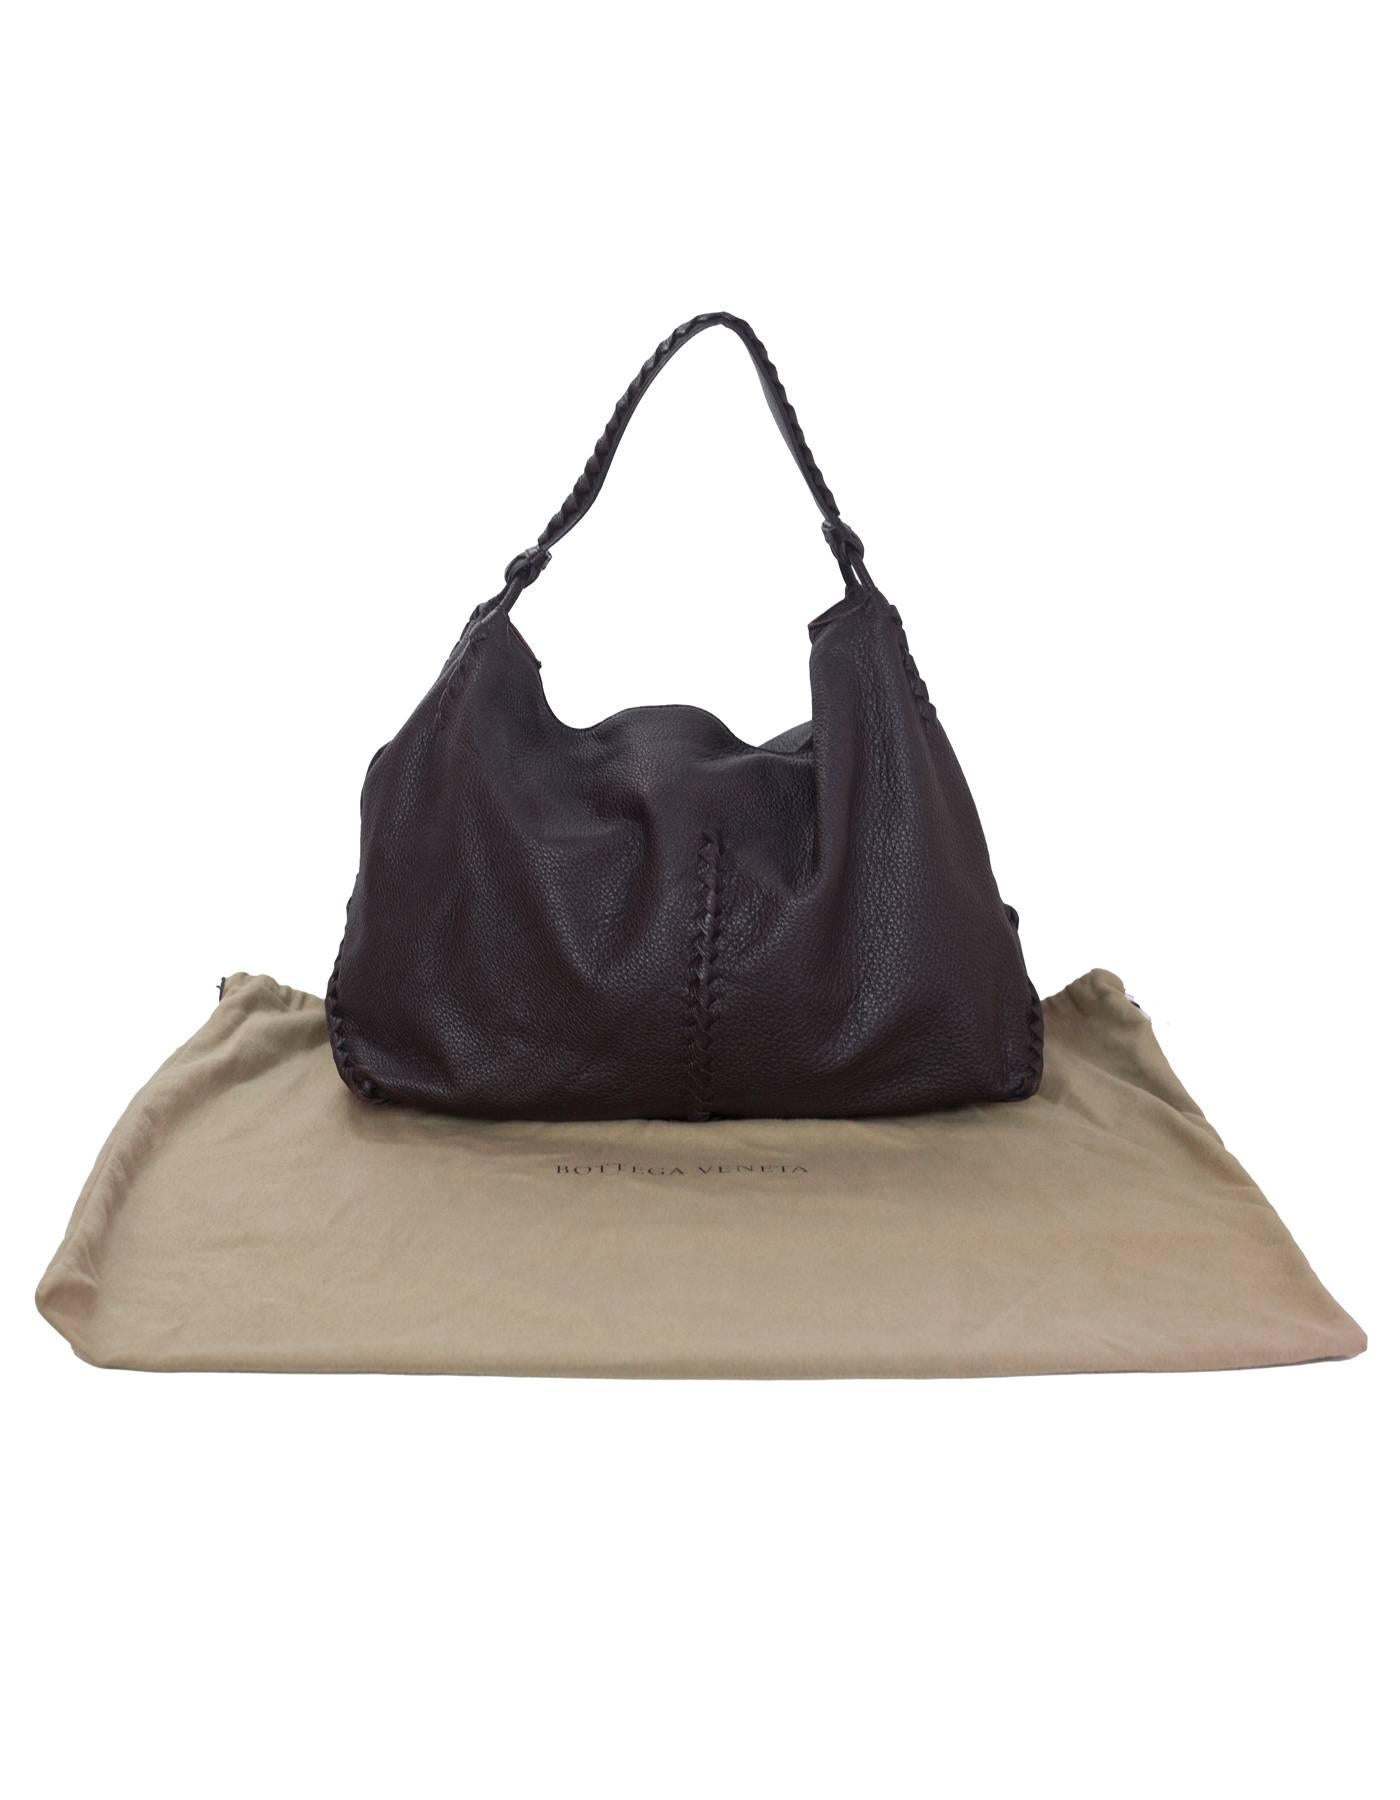 Bottega Veneta Brown Deerskin Leather & Woven Hobo Bag with DB 4